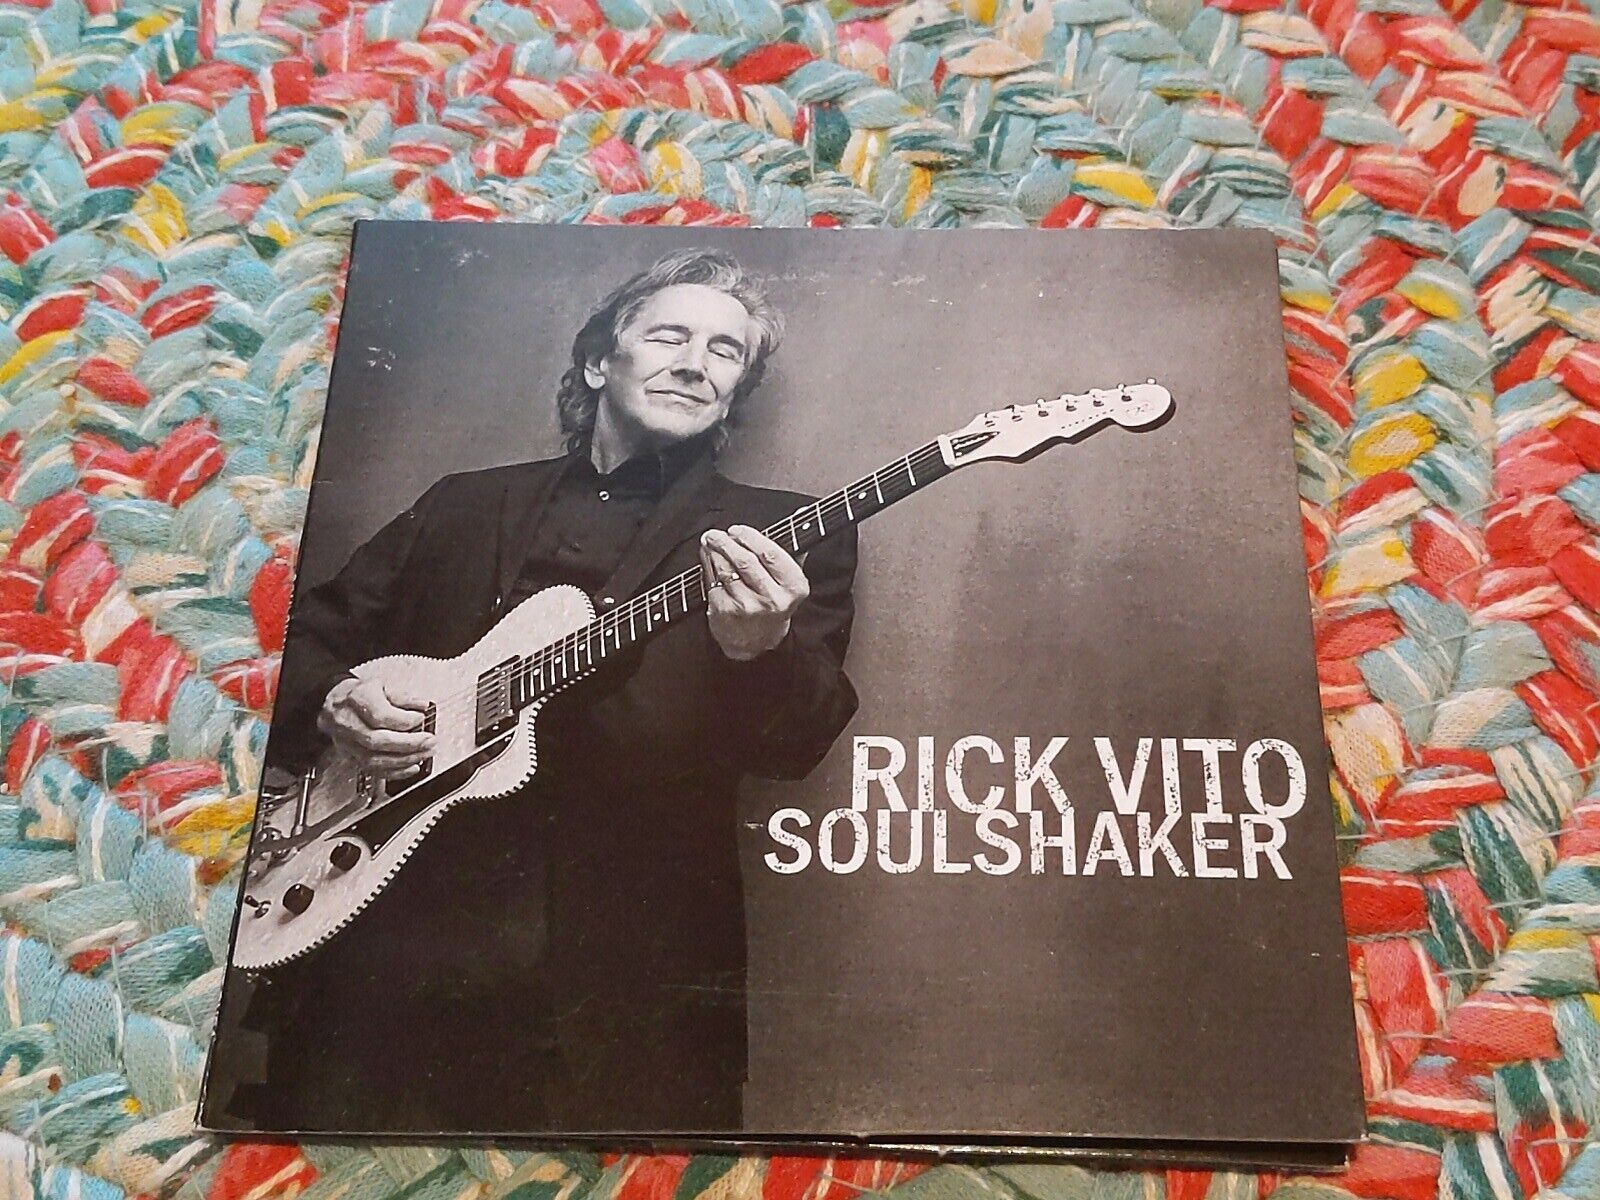 Soulshaker by Vito, Rick (CD, 2019)